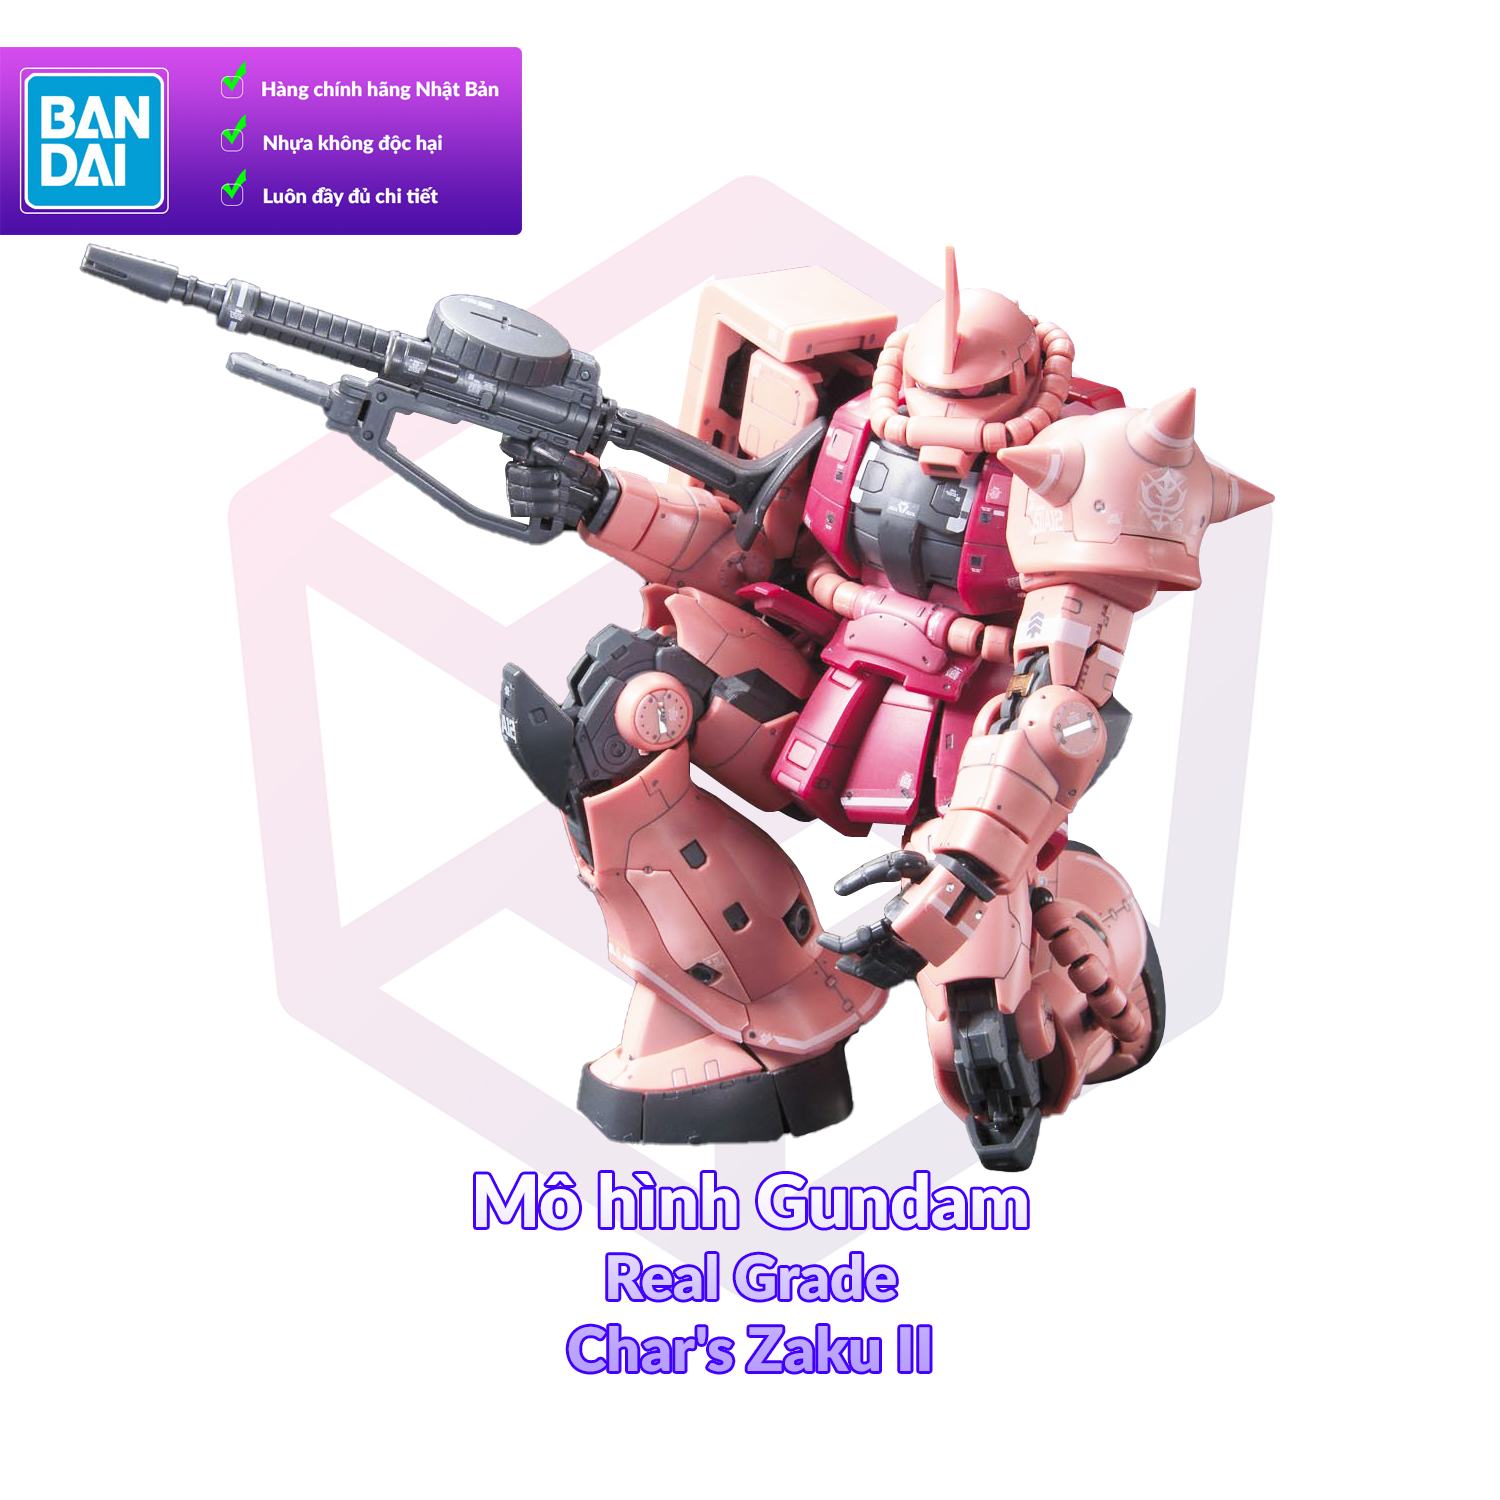 7-11 12 VOUCHER 8%Mô Hình Gundam Bandai RG 02 MS-06S Char s Zaku II 1 144